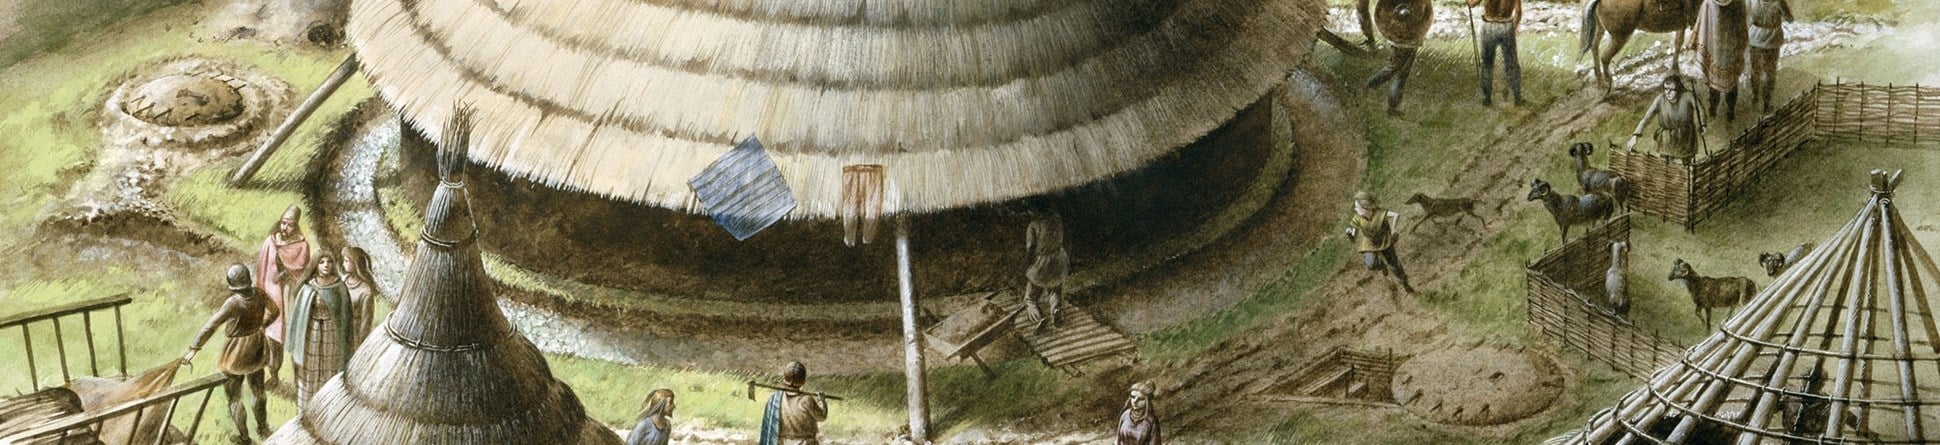 Colour illustration of Iron Age round houses